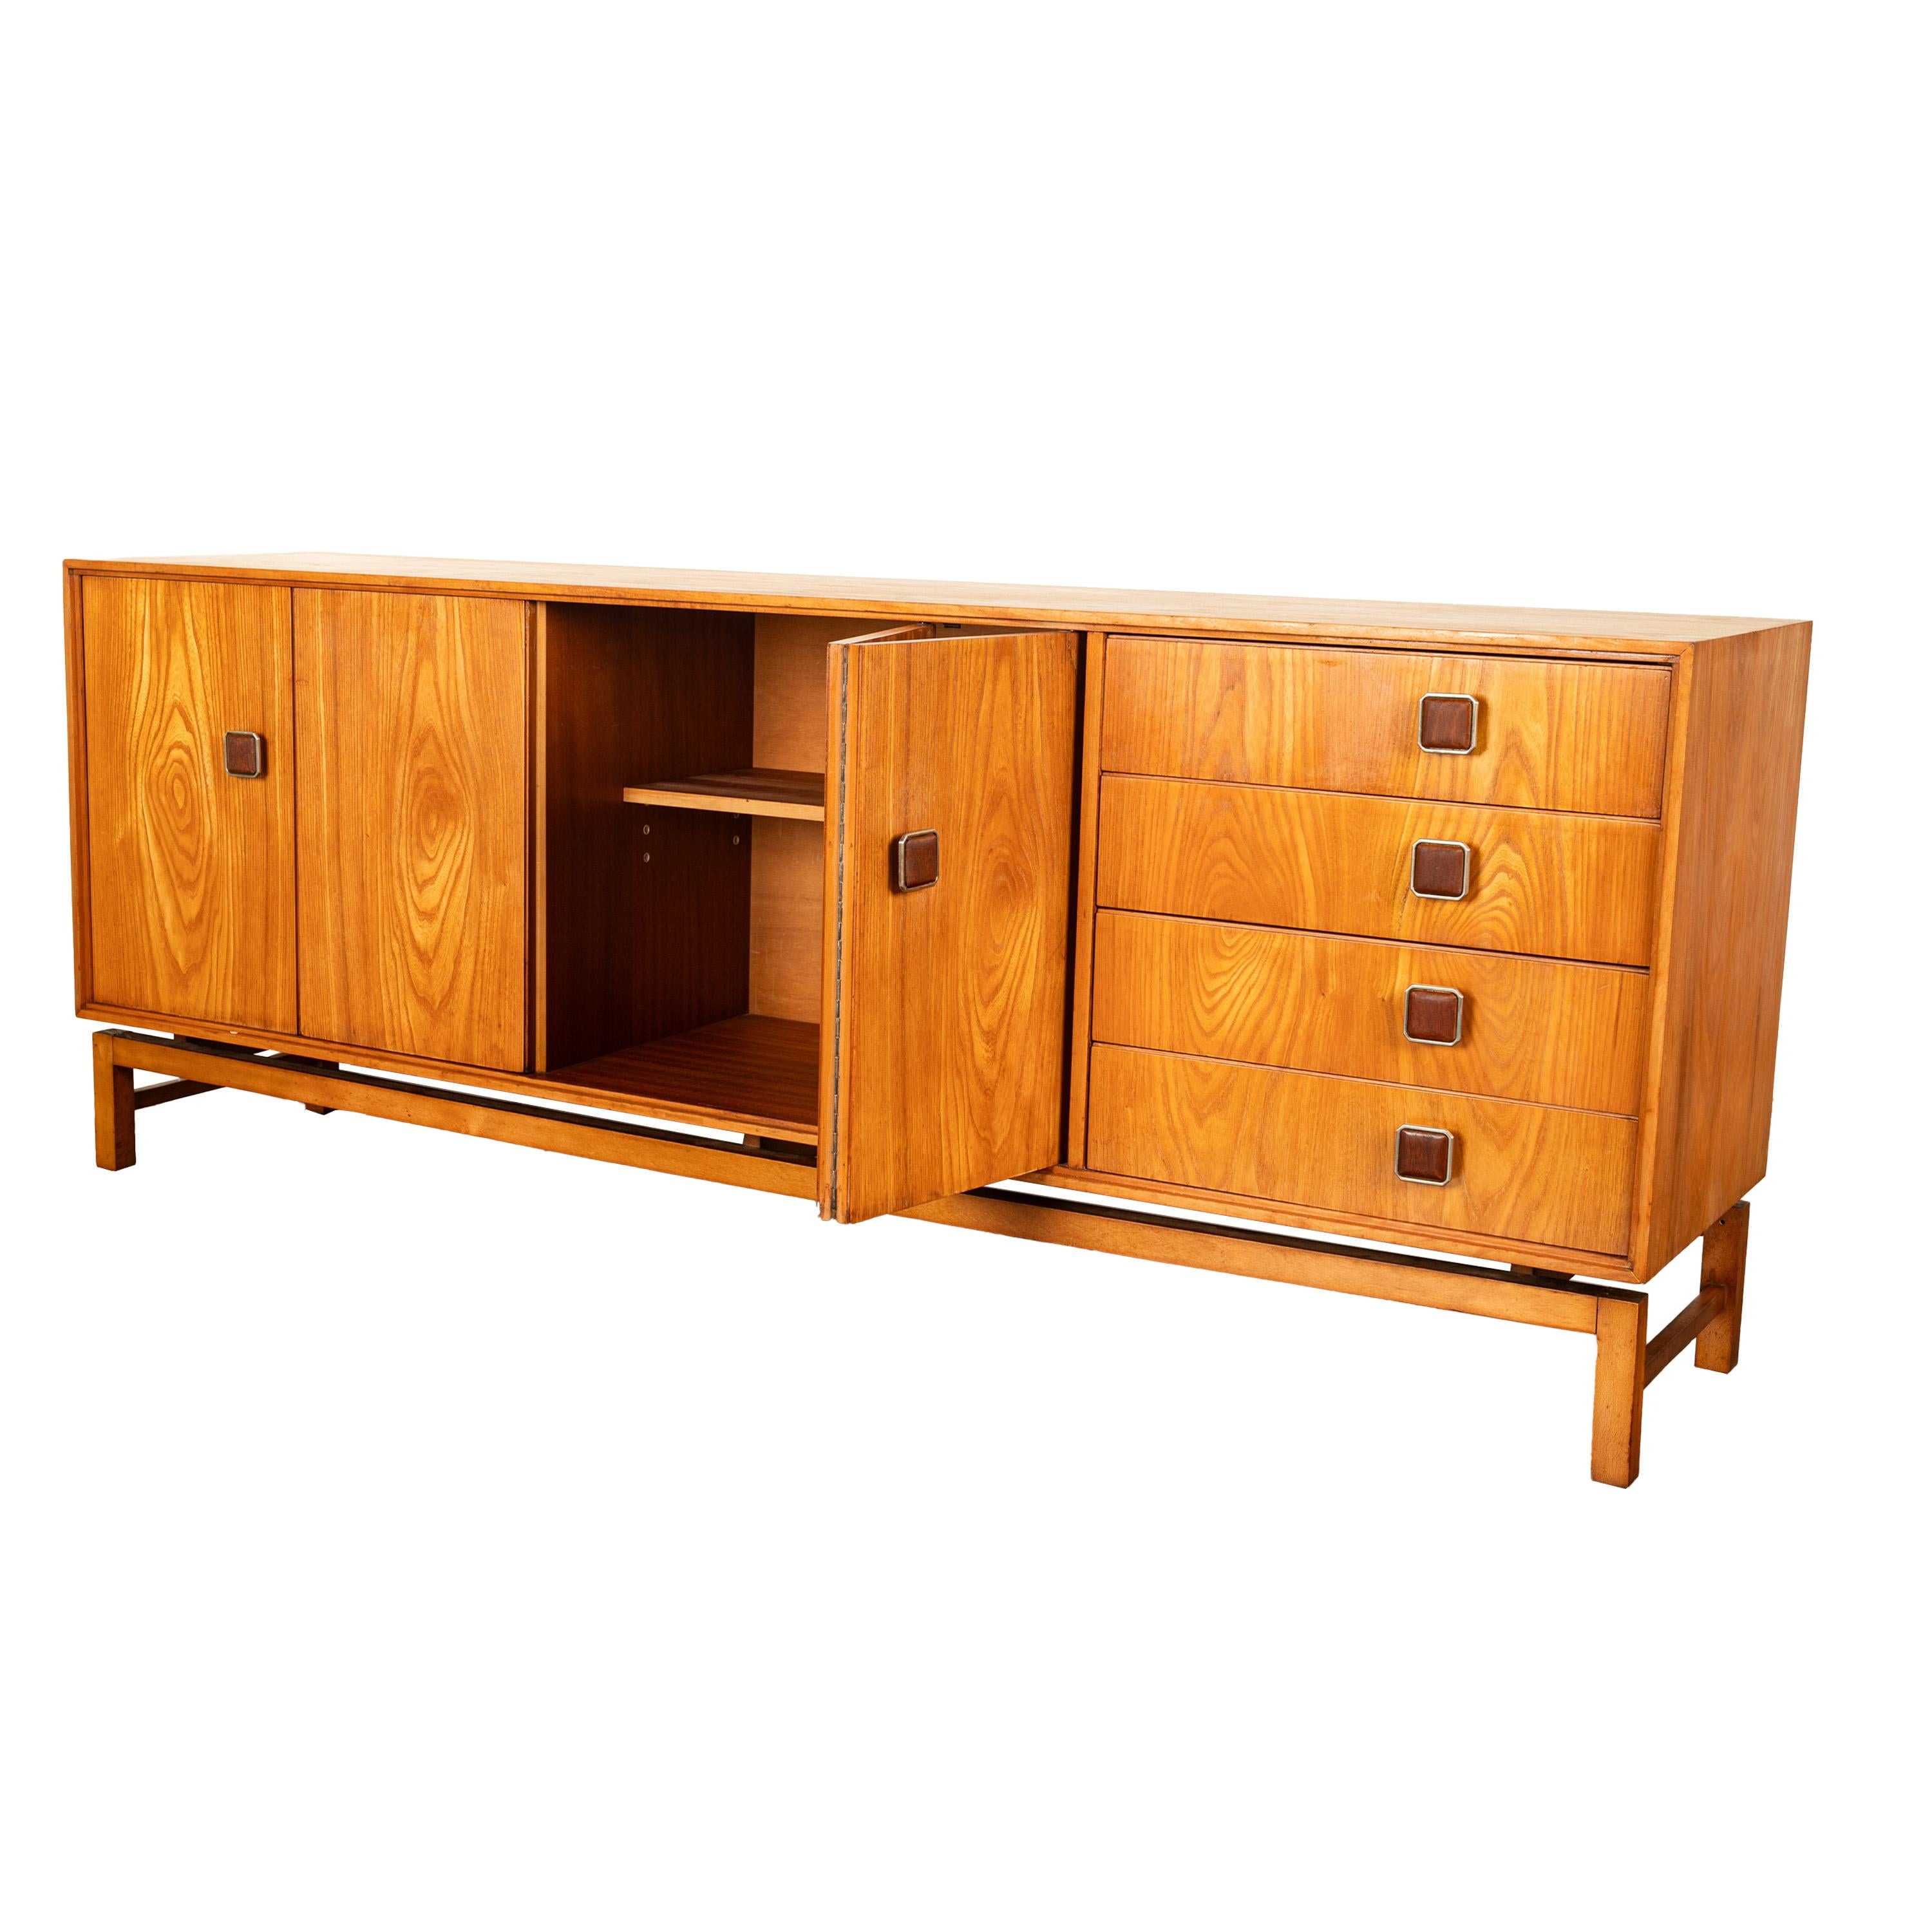 Original Danish Mid Century Modern Teak Credenza Sideboard Cabinet 6' Long 1960  11